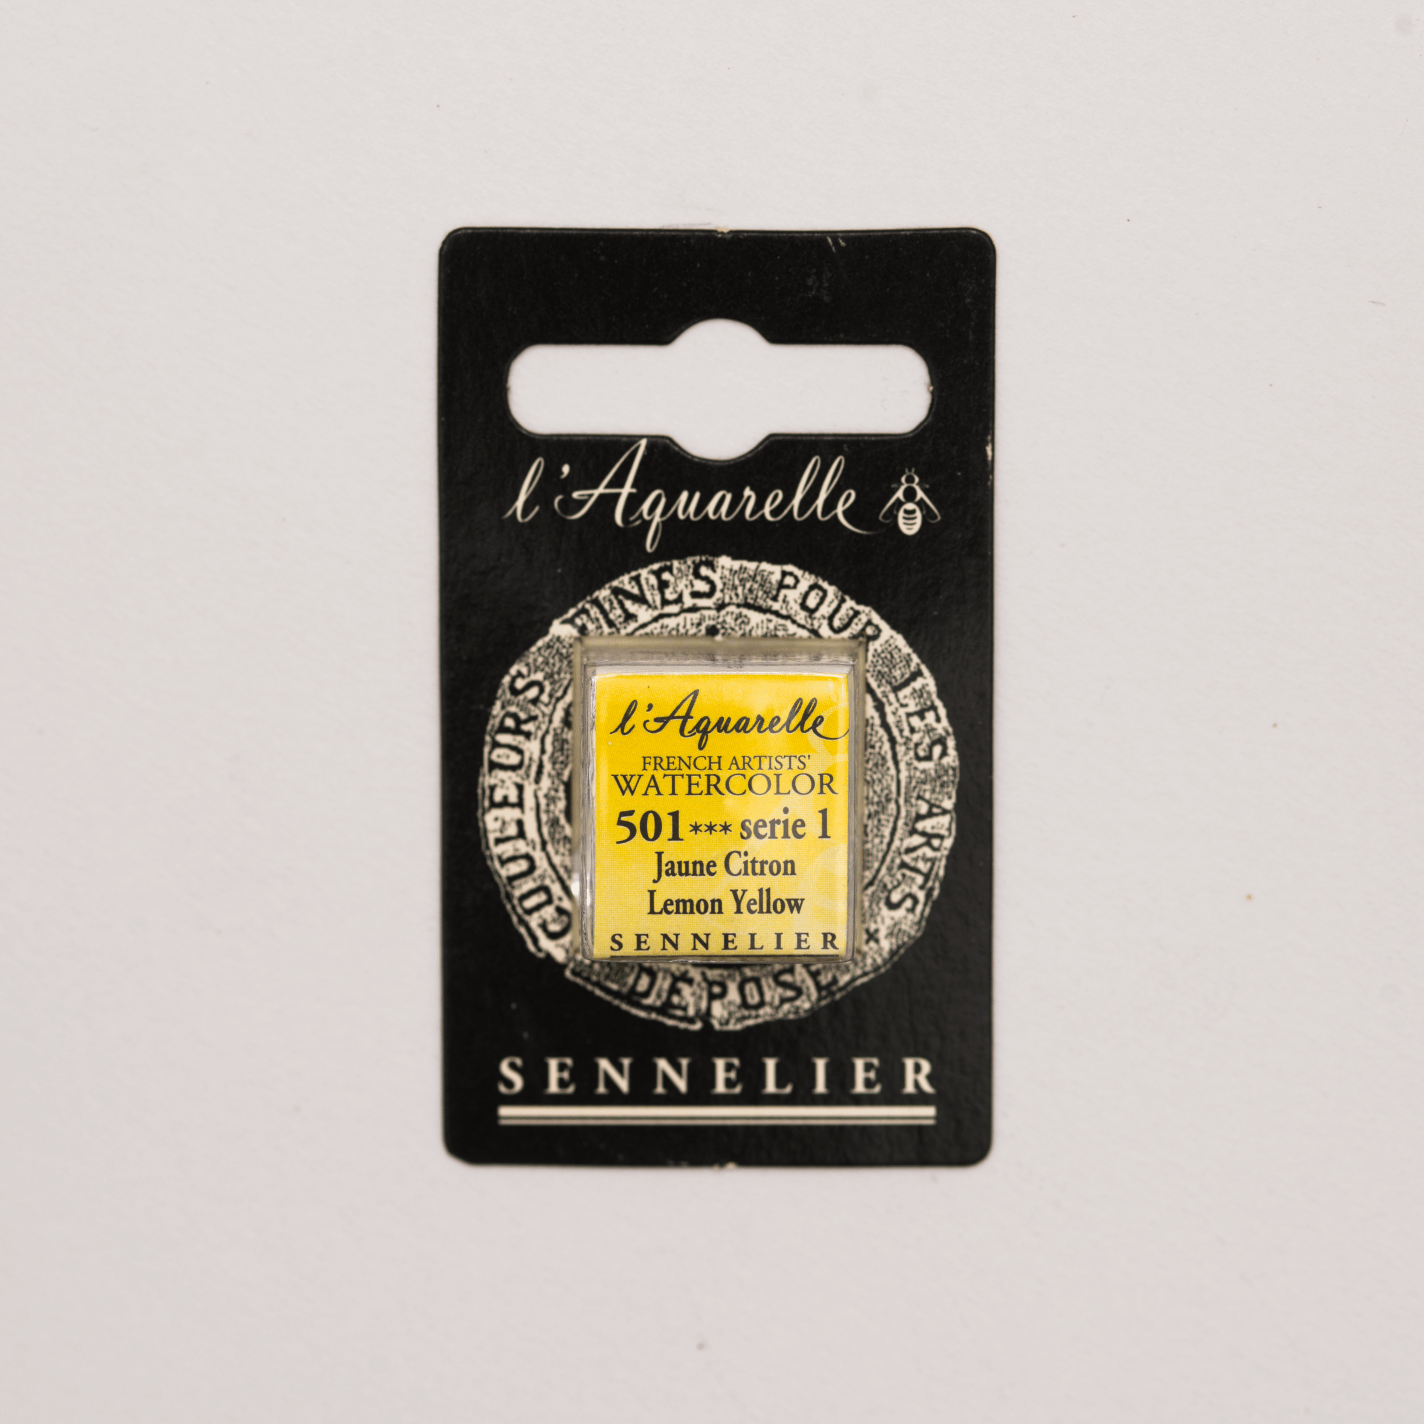 Sennelier Aquarelle pans 1/2 pan Lemon Yellow